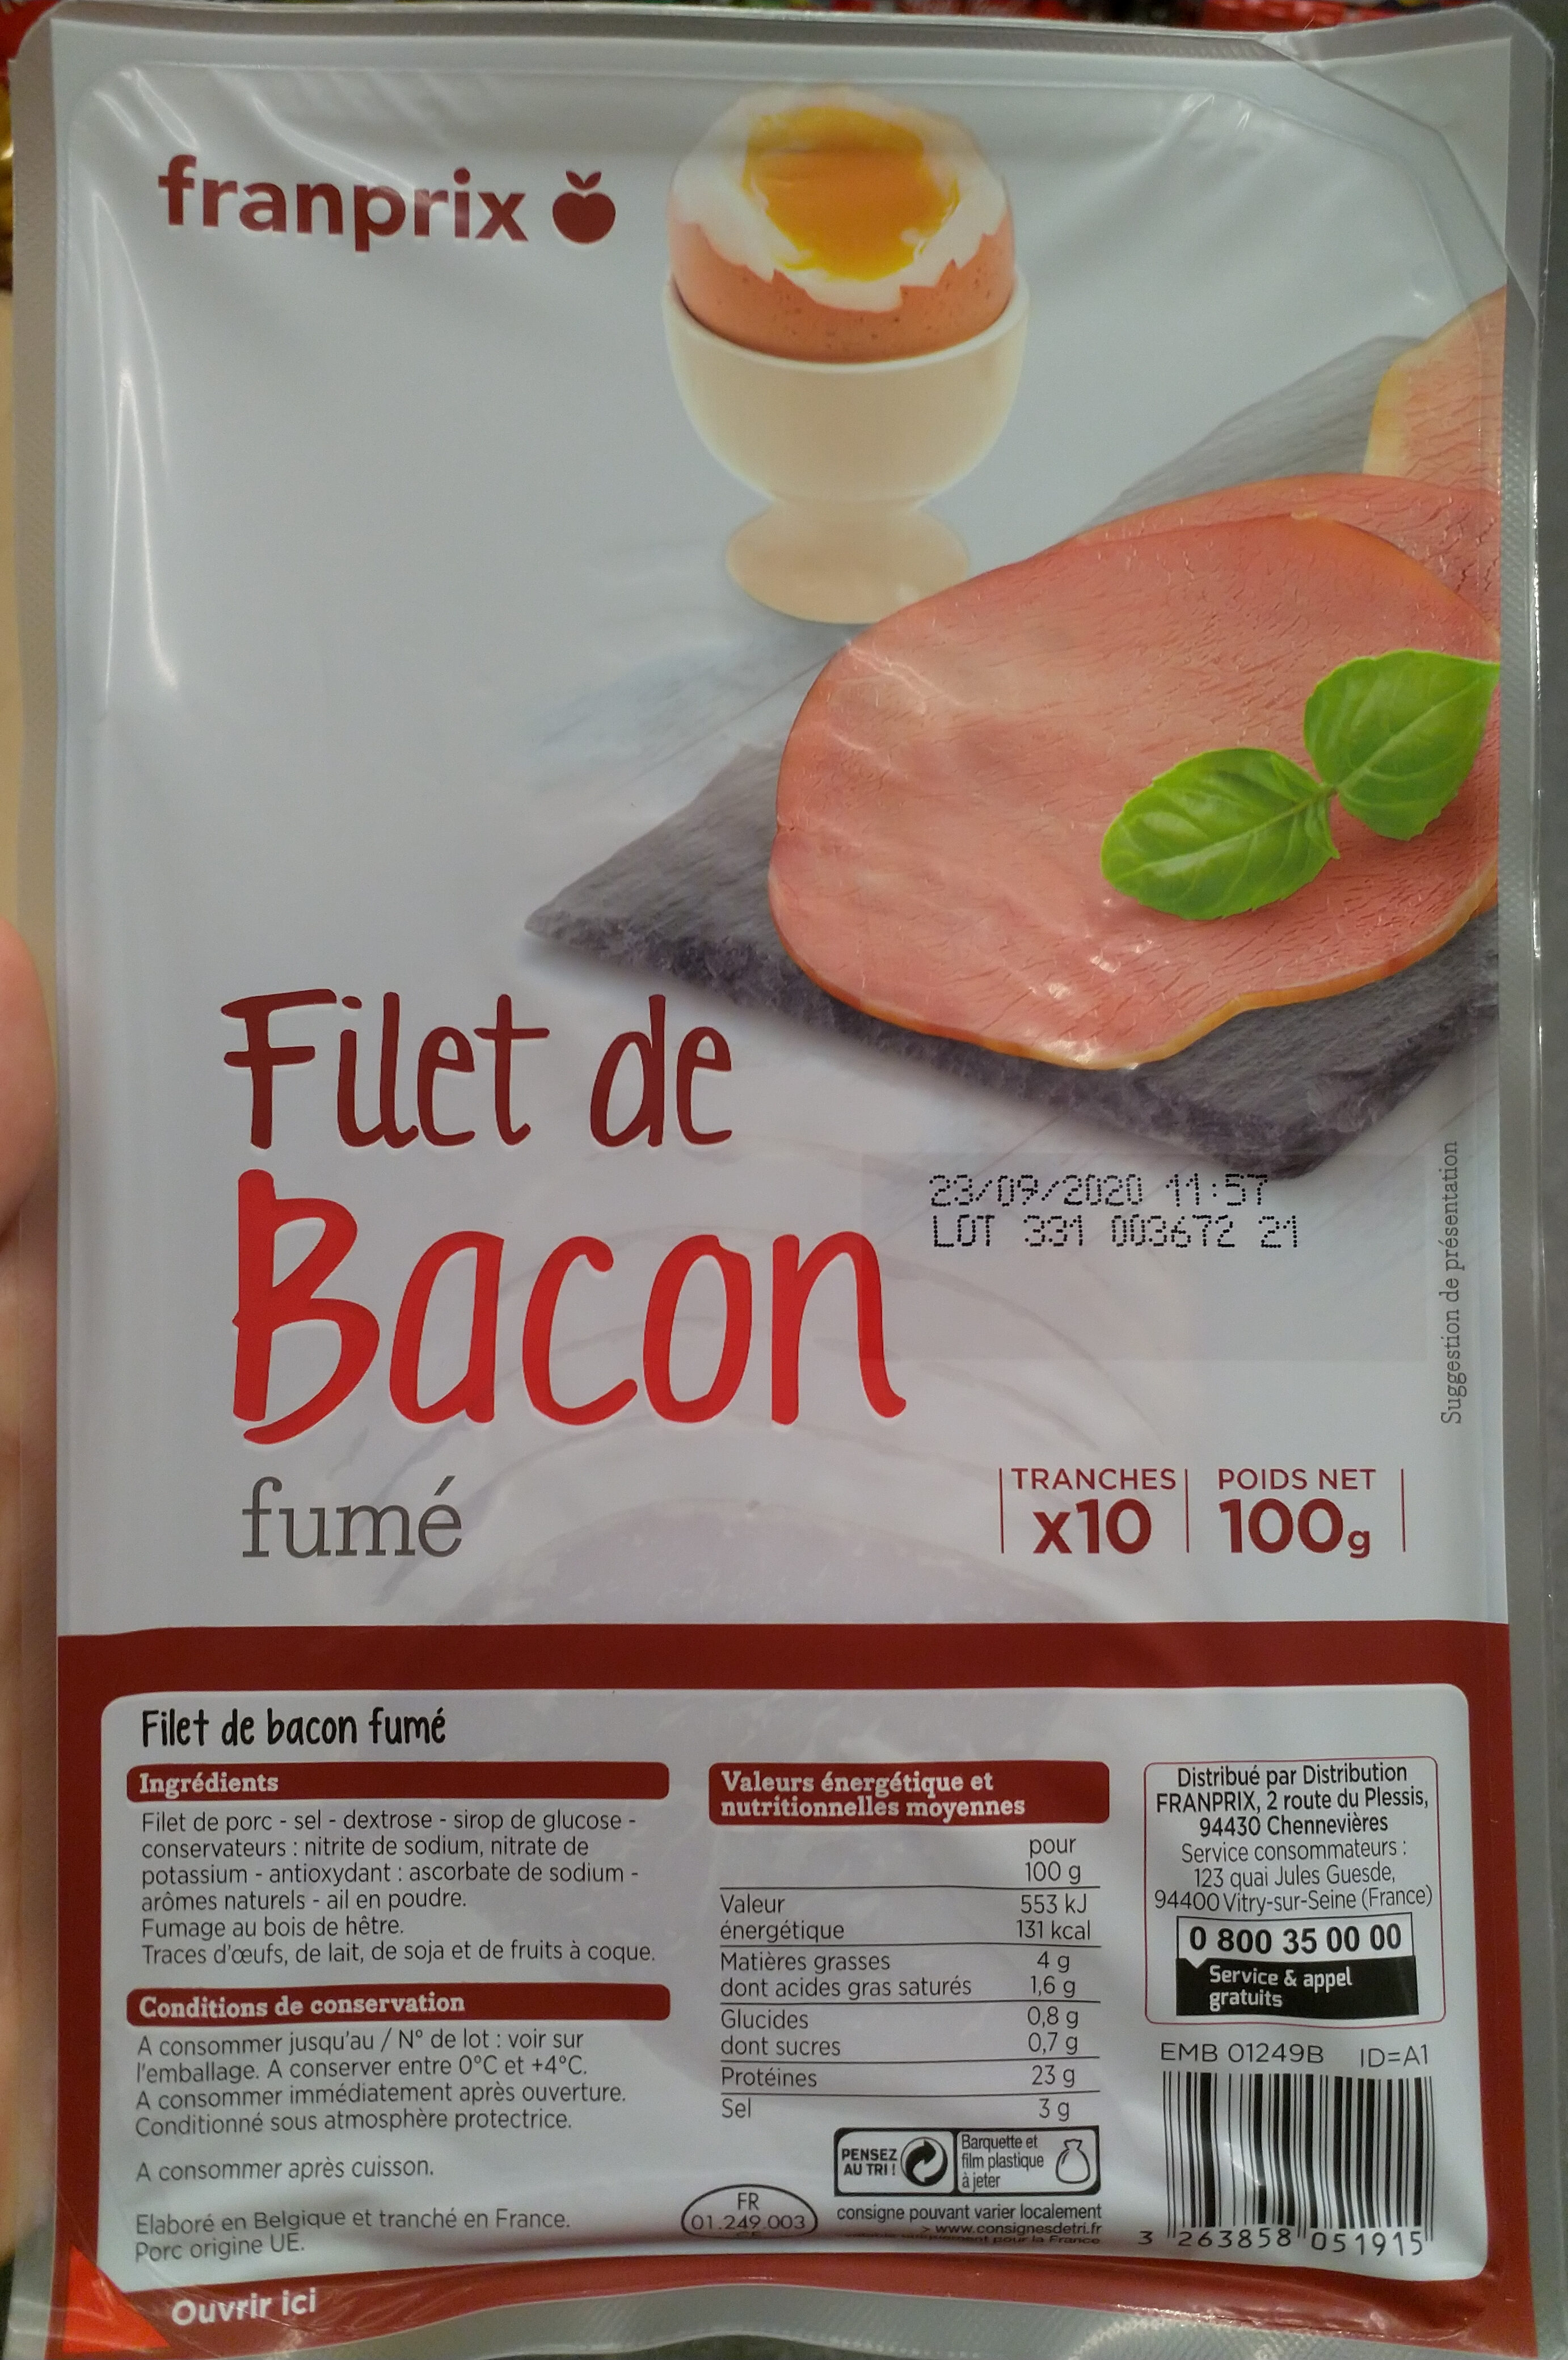 Filet de Bacon - Product - fr